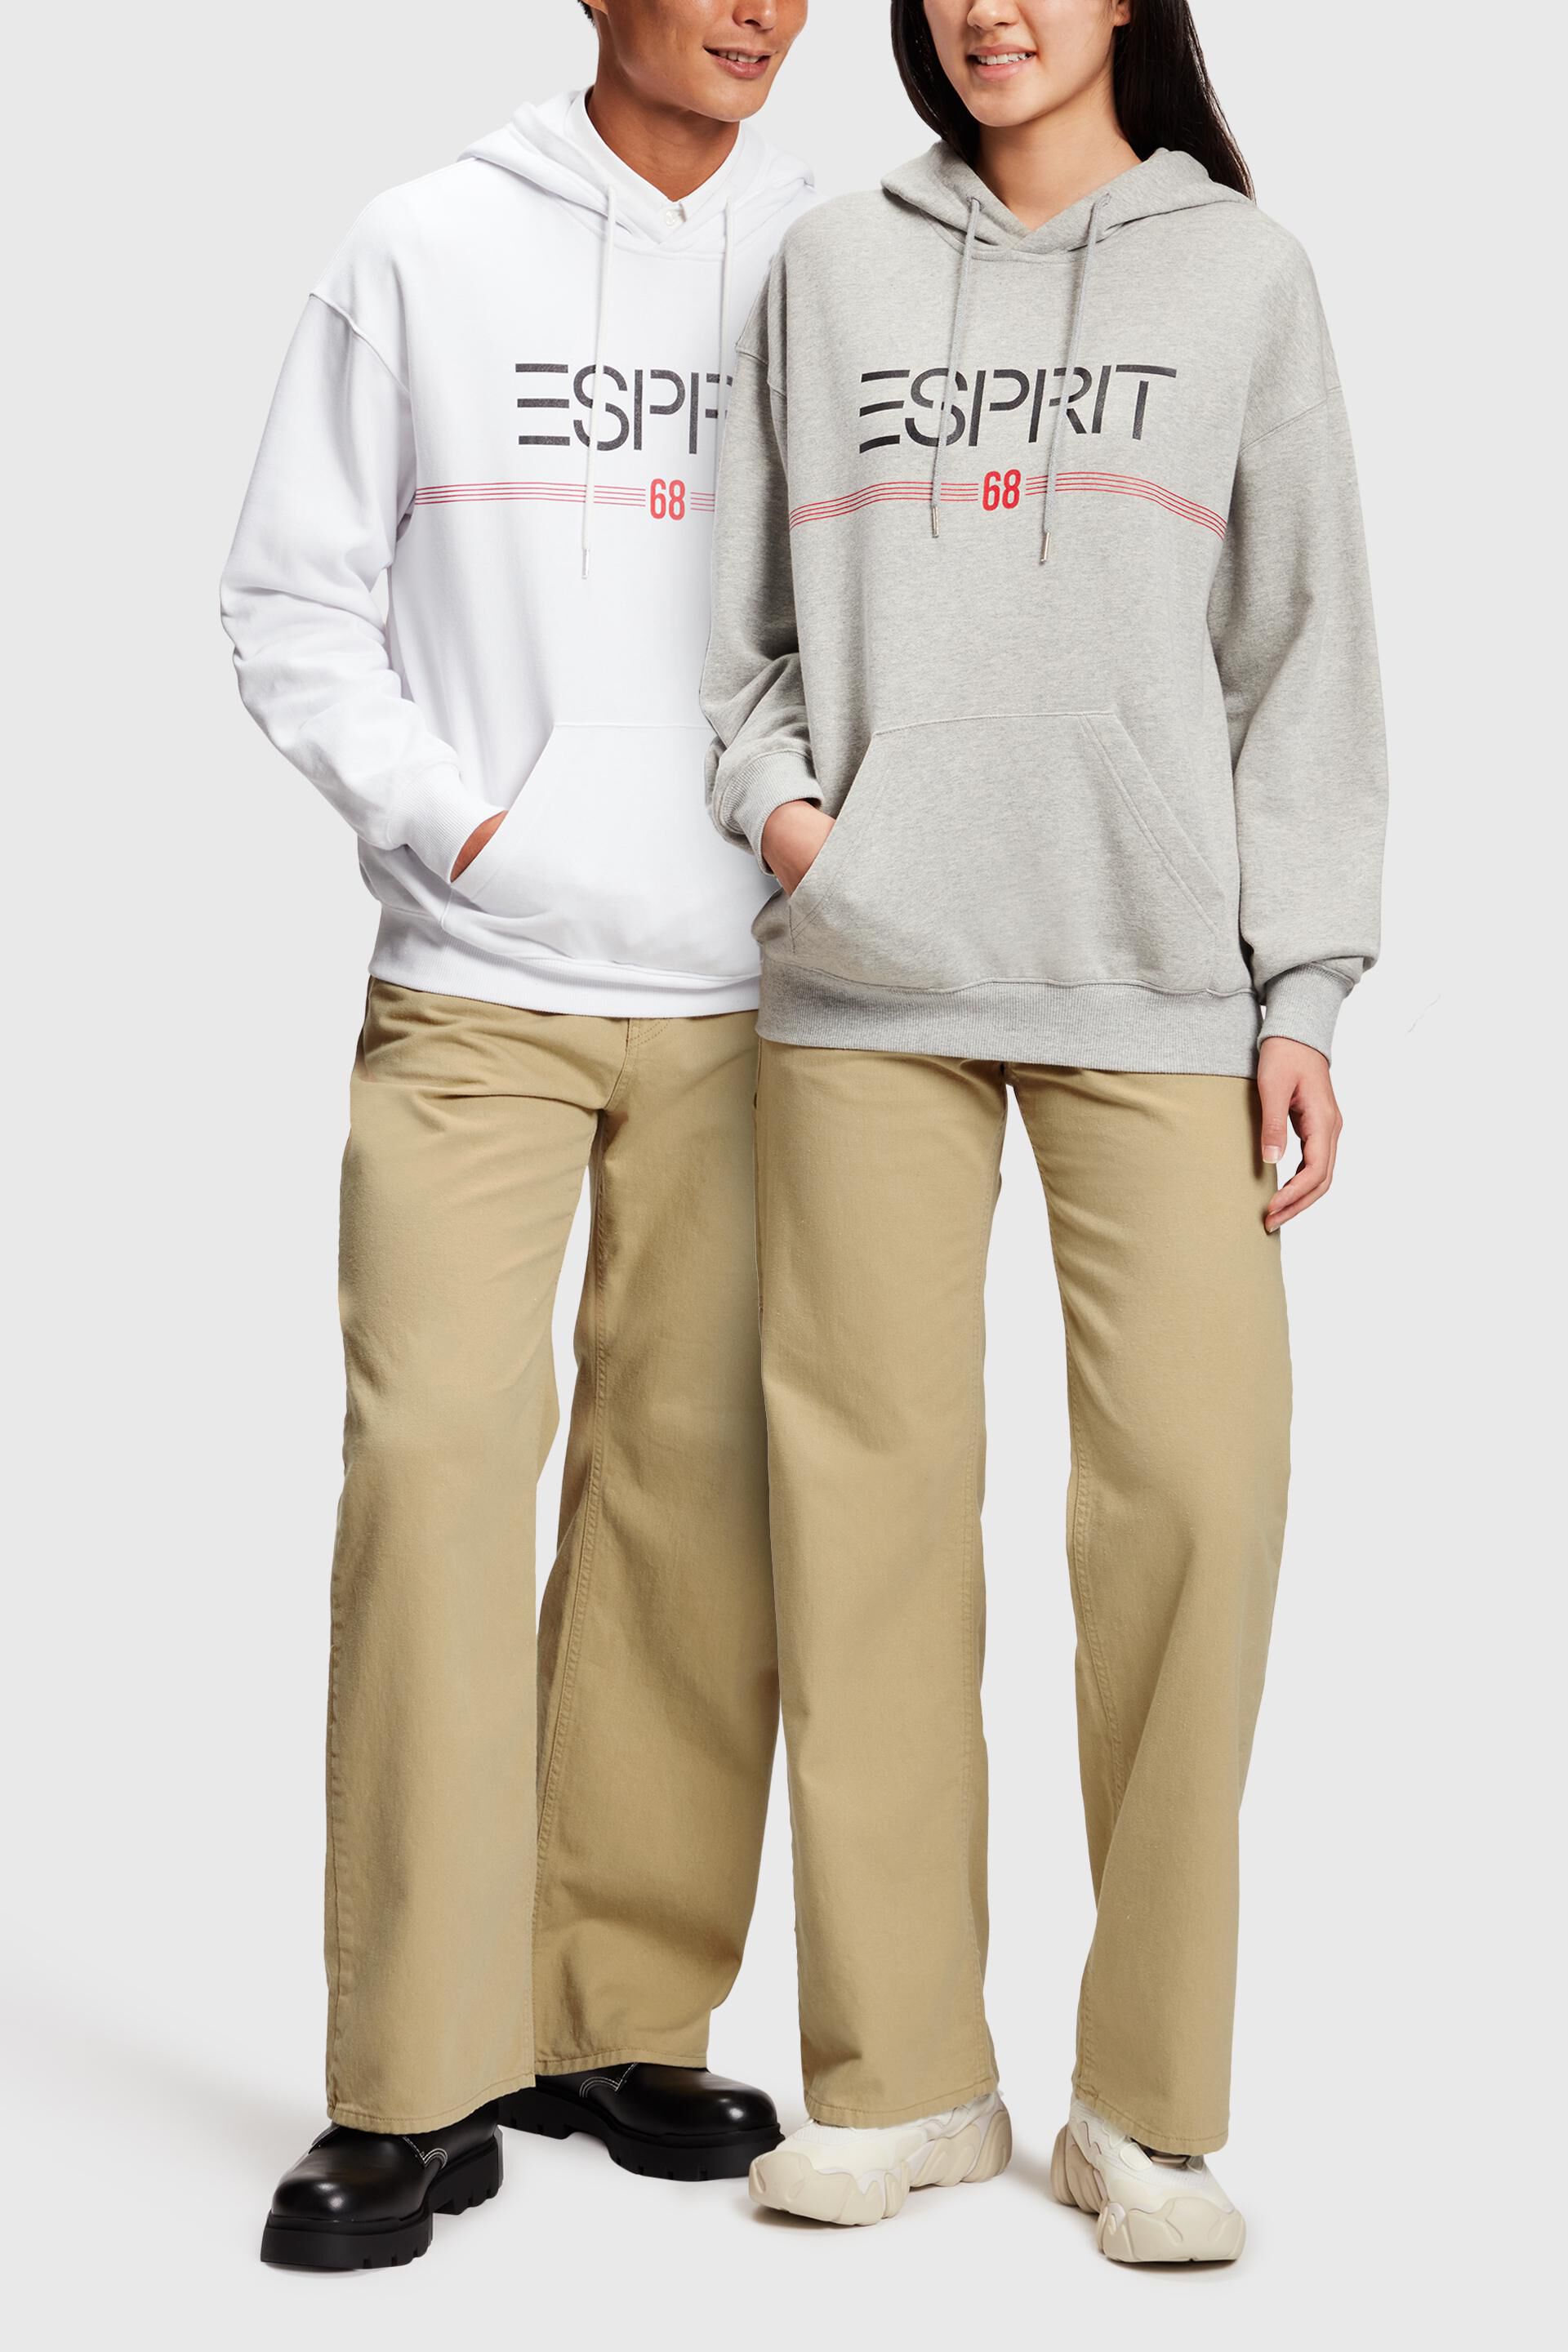 ESPRIT  Slim fit trousers in a cottonlinen blend at our online shop